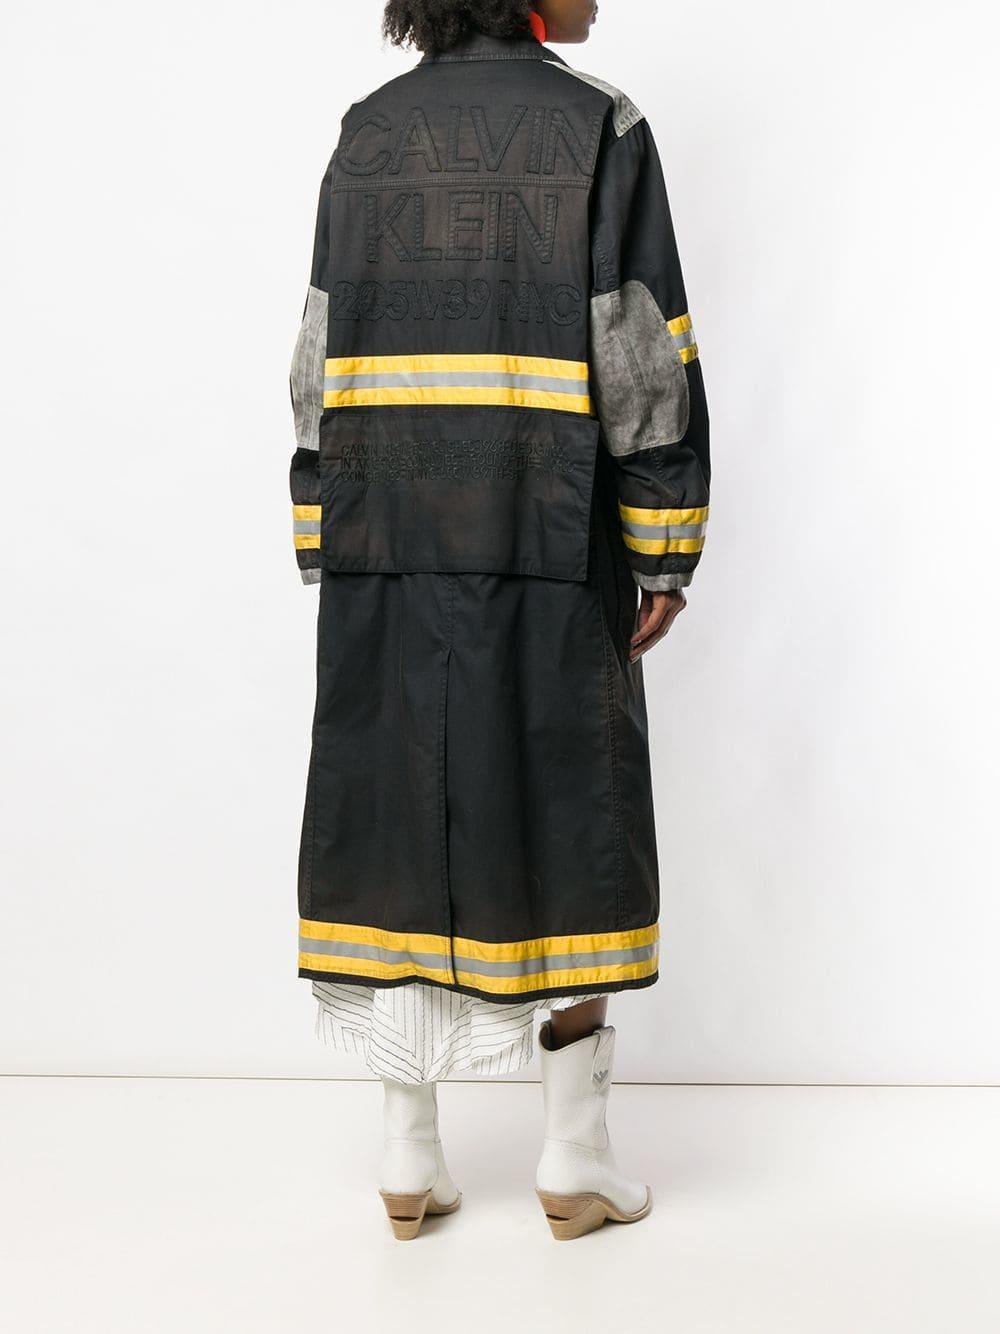 CALVIN KLEIN 205W39NYC Fireman Coat in Black,Yellow (Black) | Lyst